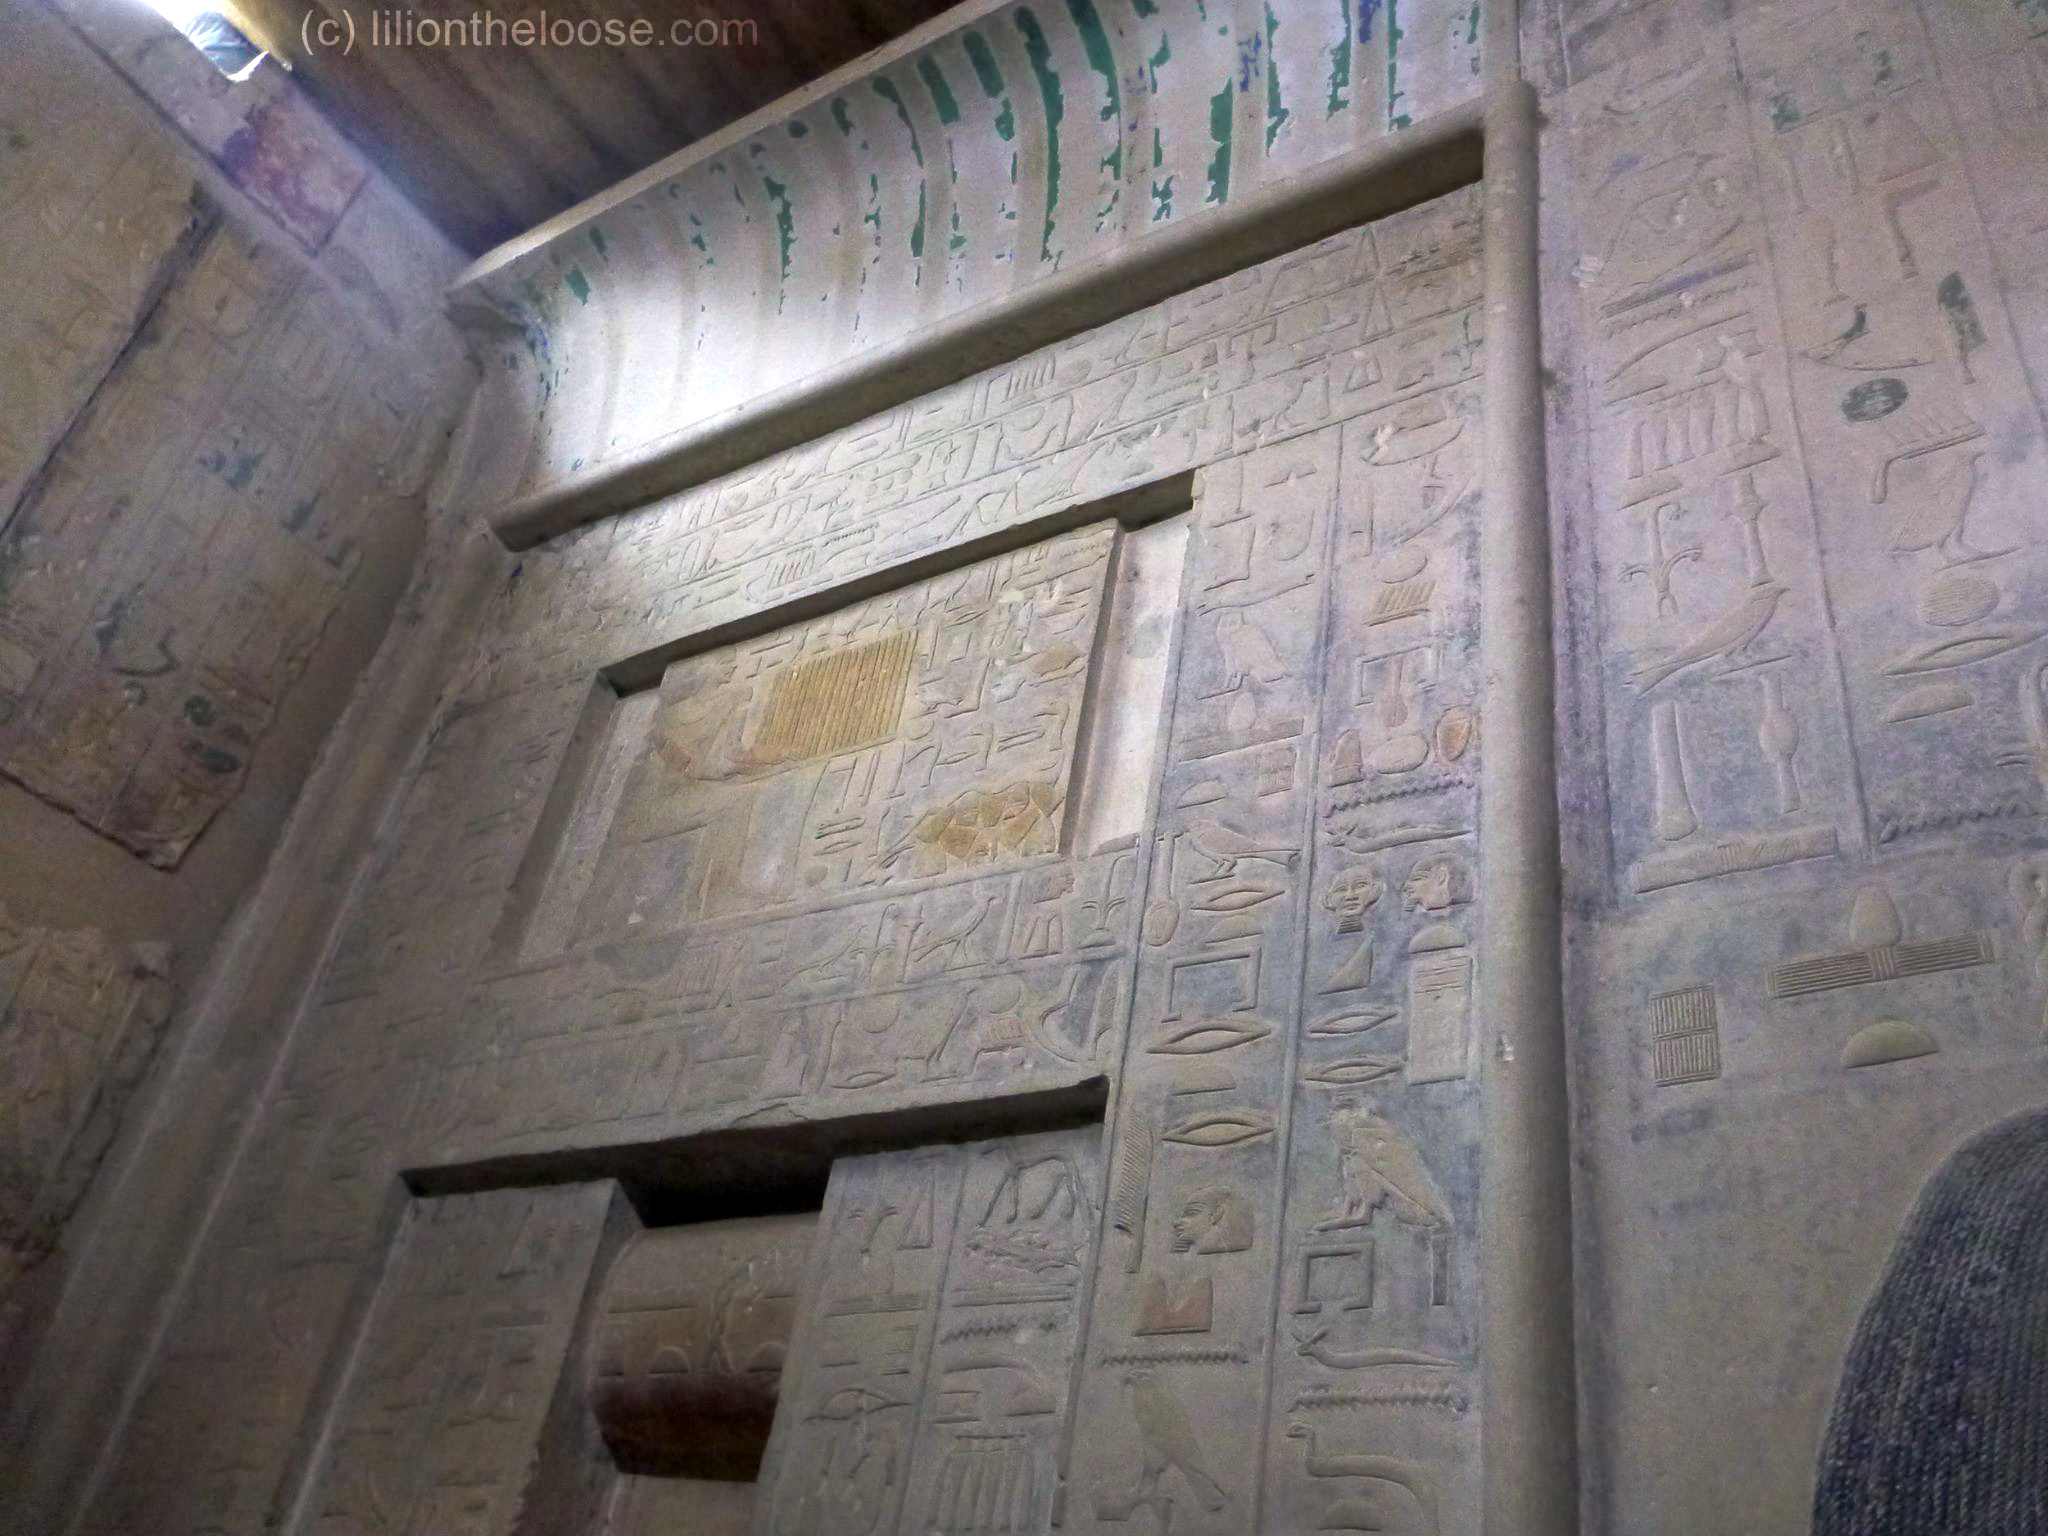 False door at details at the tomb of Ptah-hotep